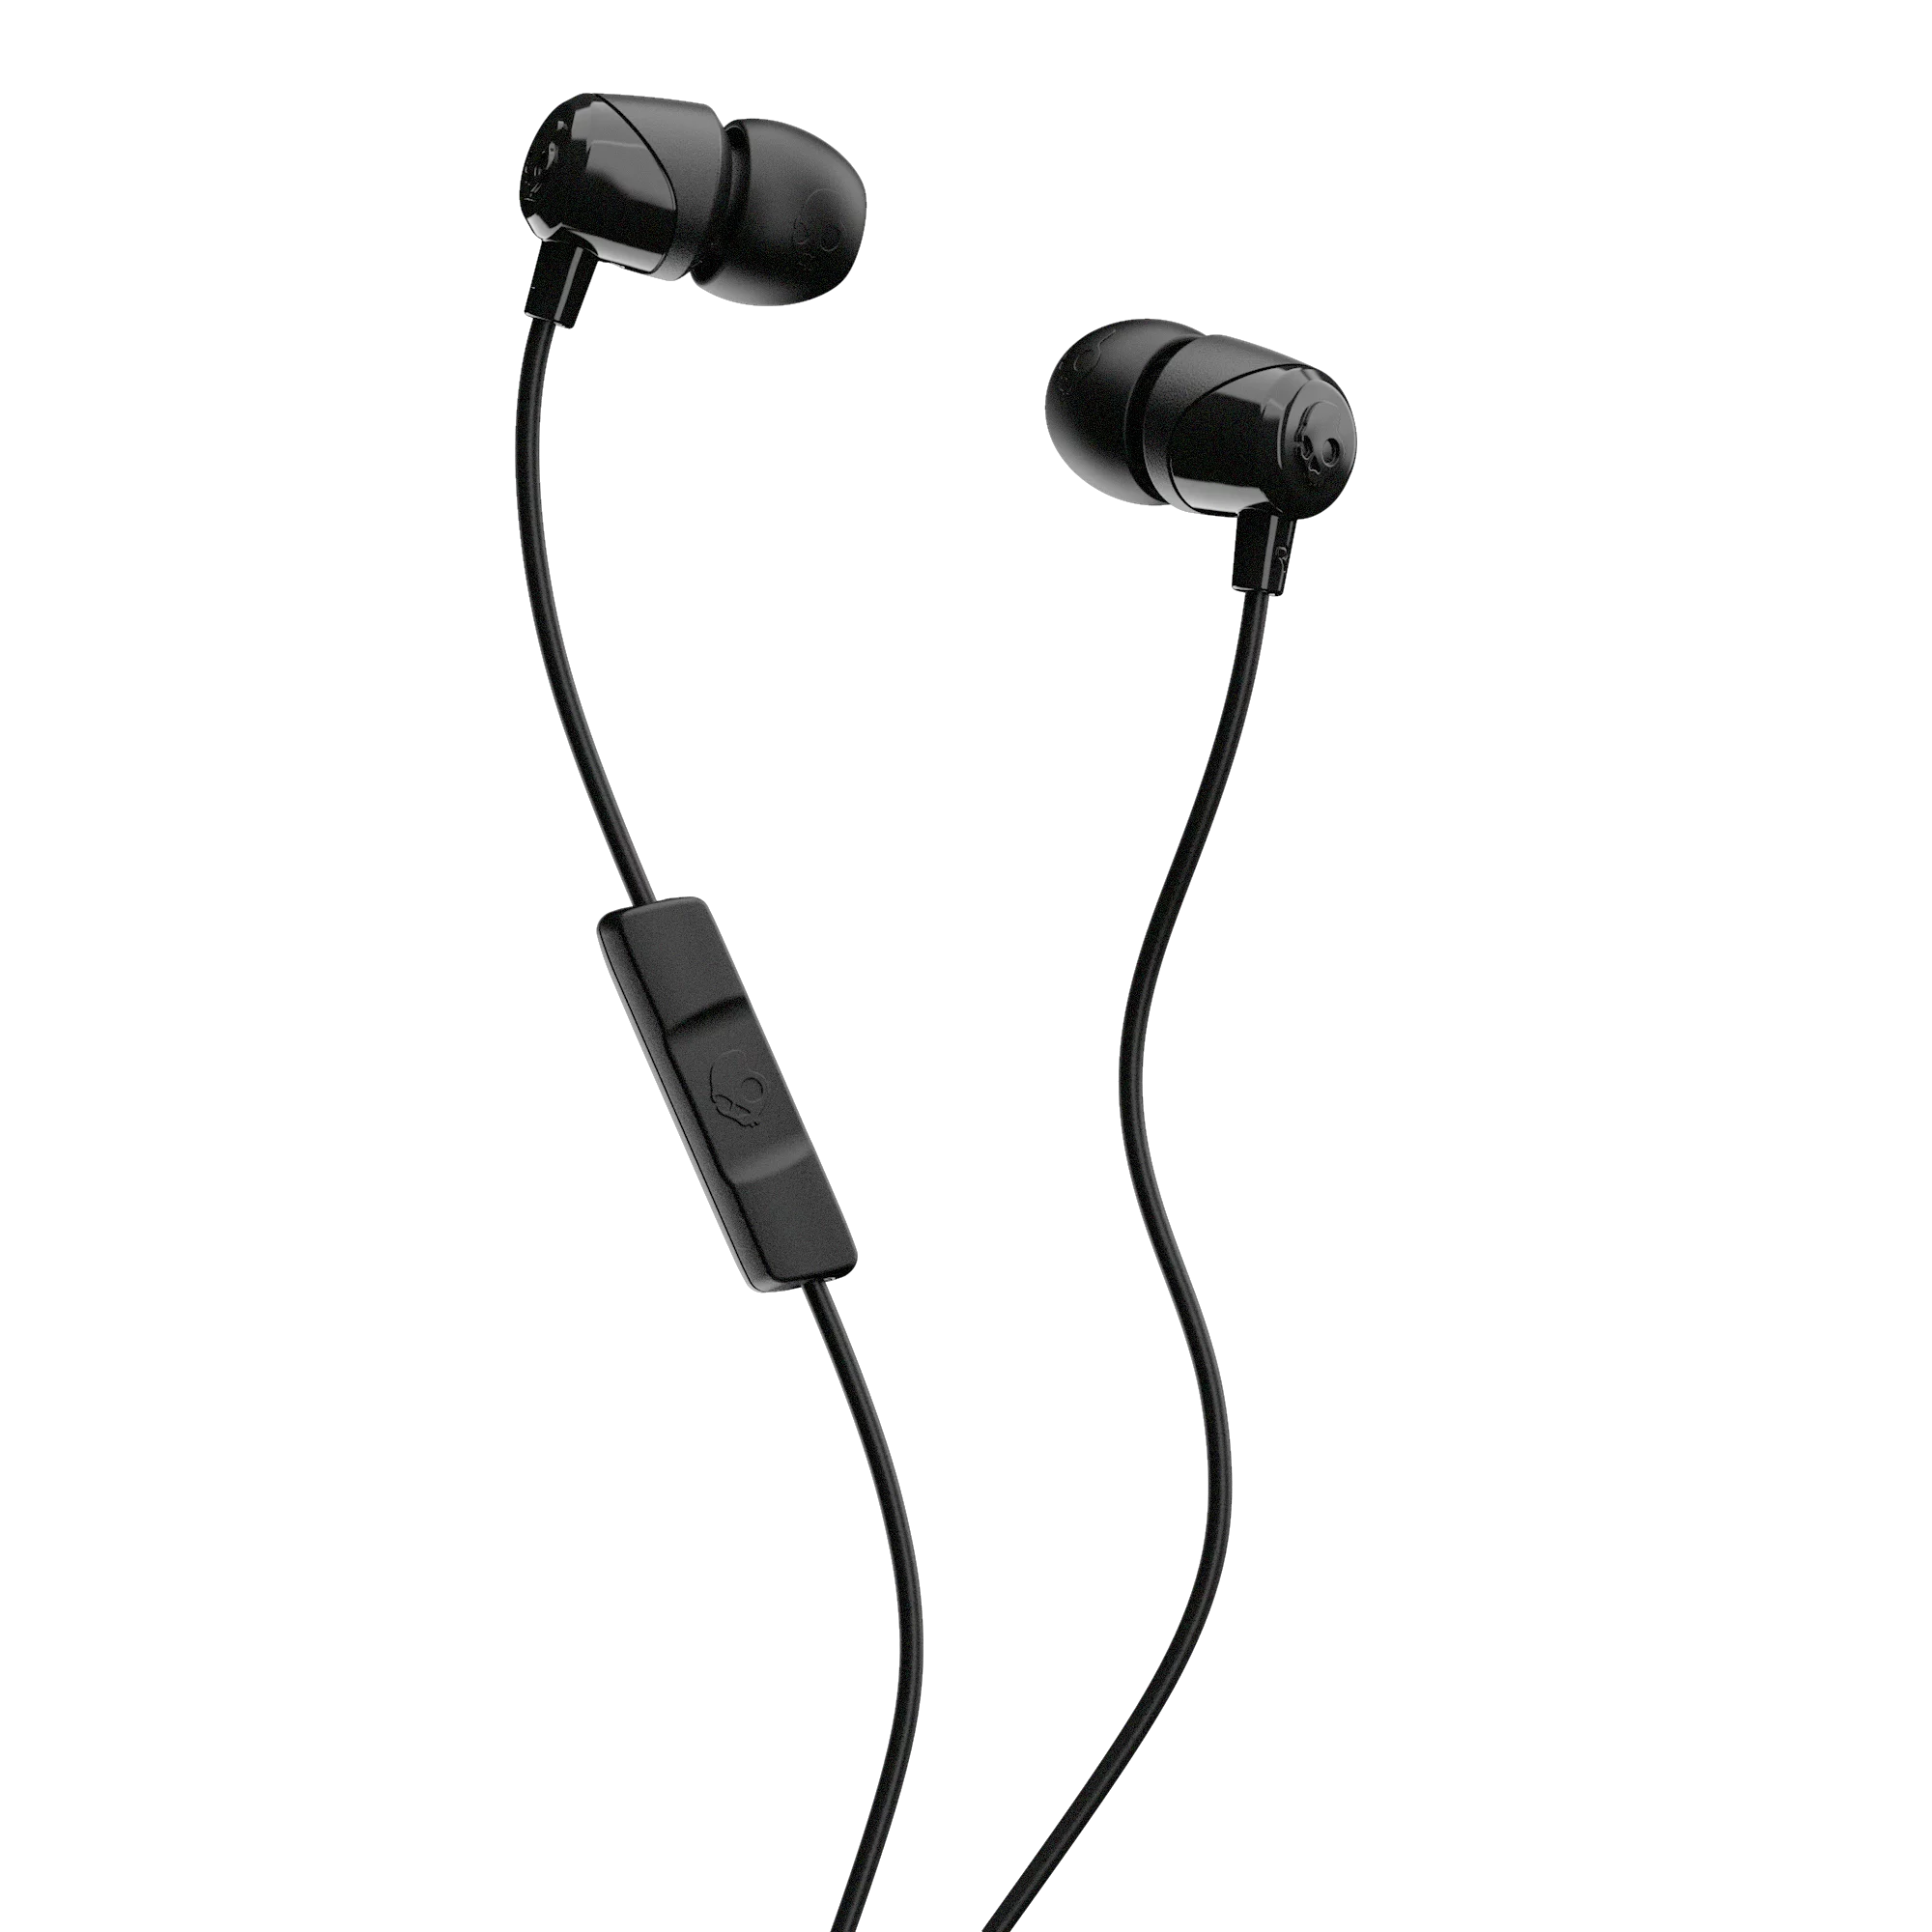 Skullcandy Jib Wired Earbud Headphones with Microphone